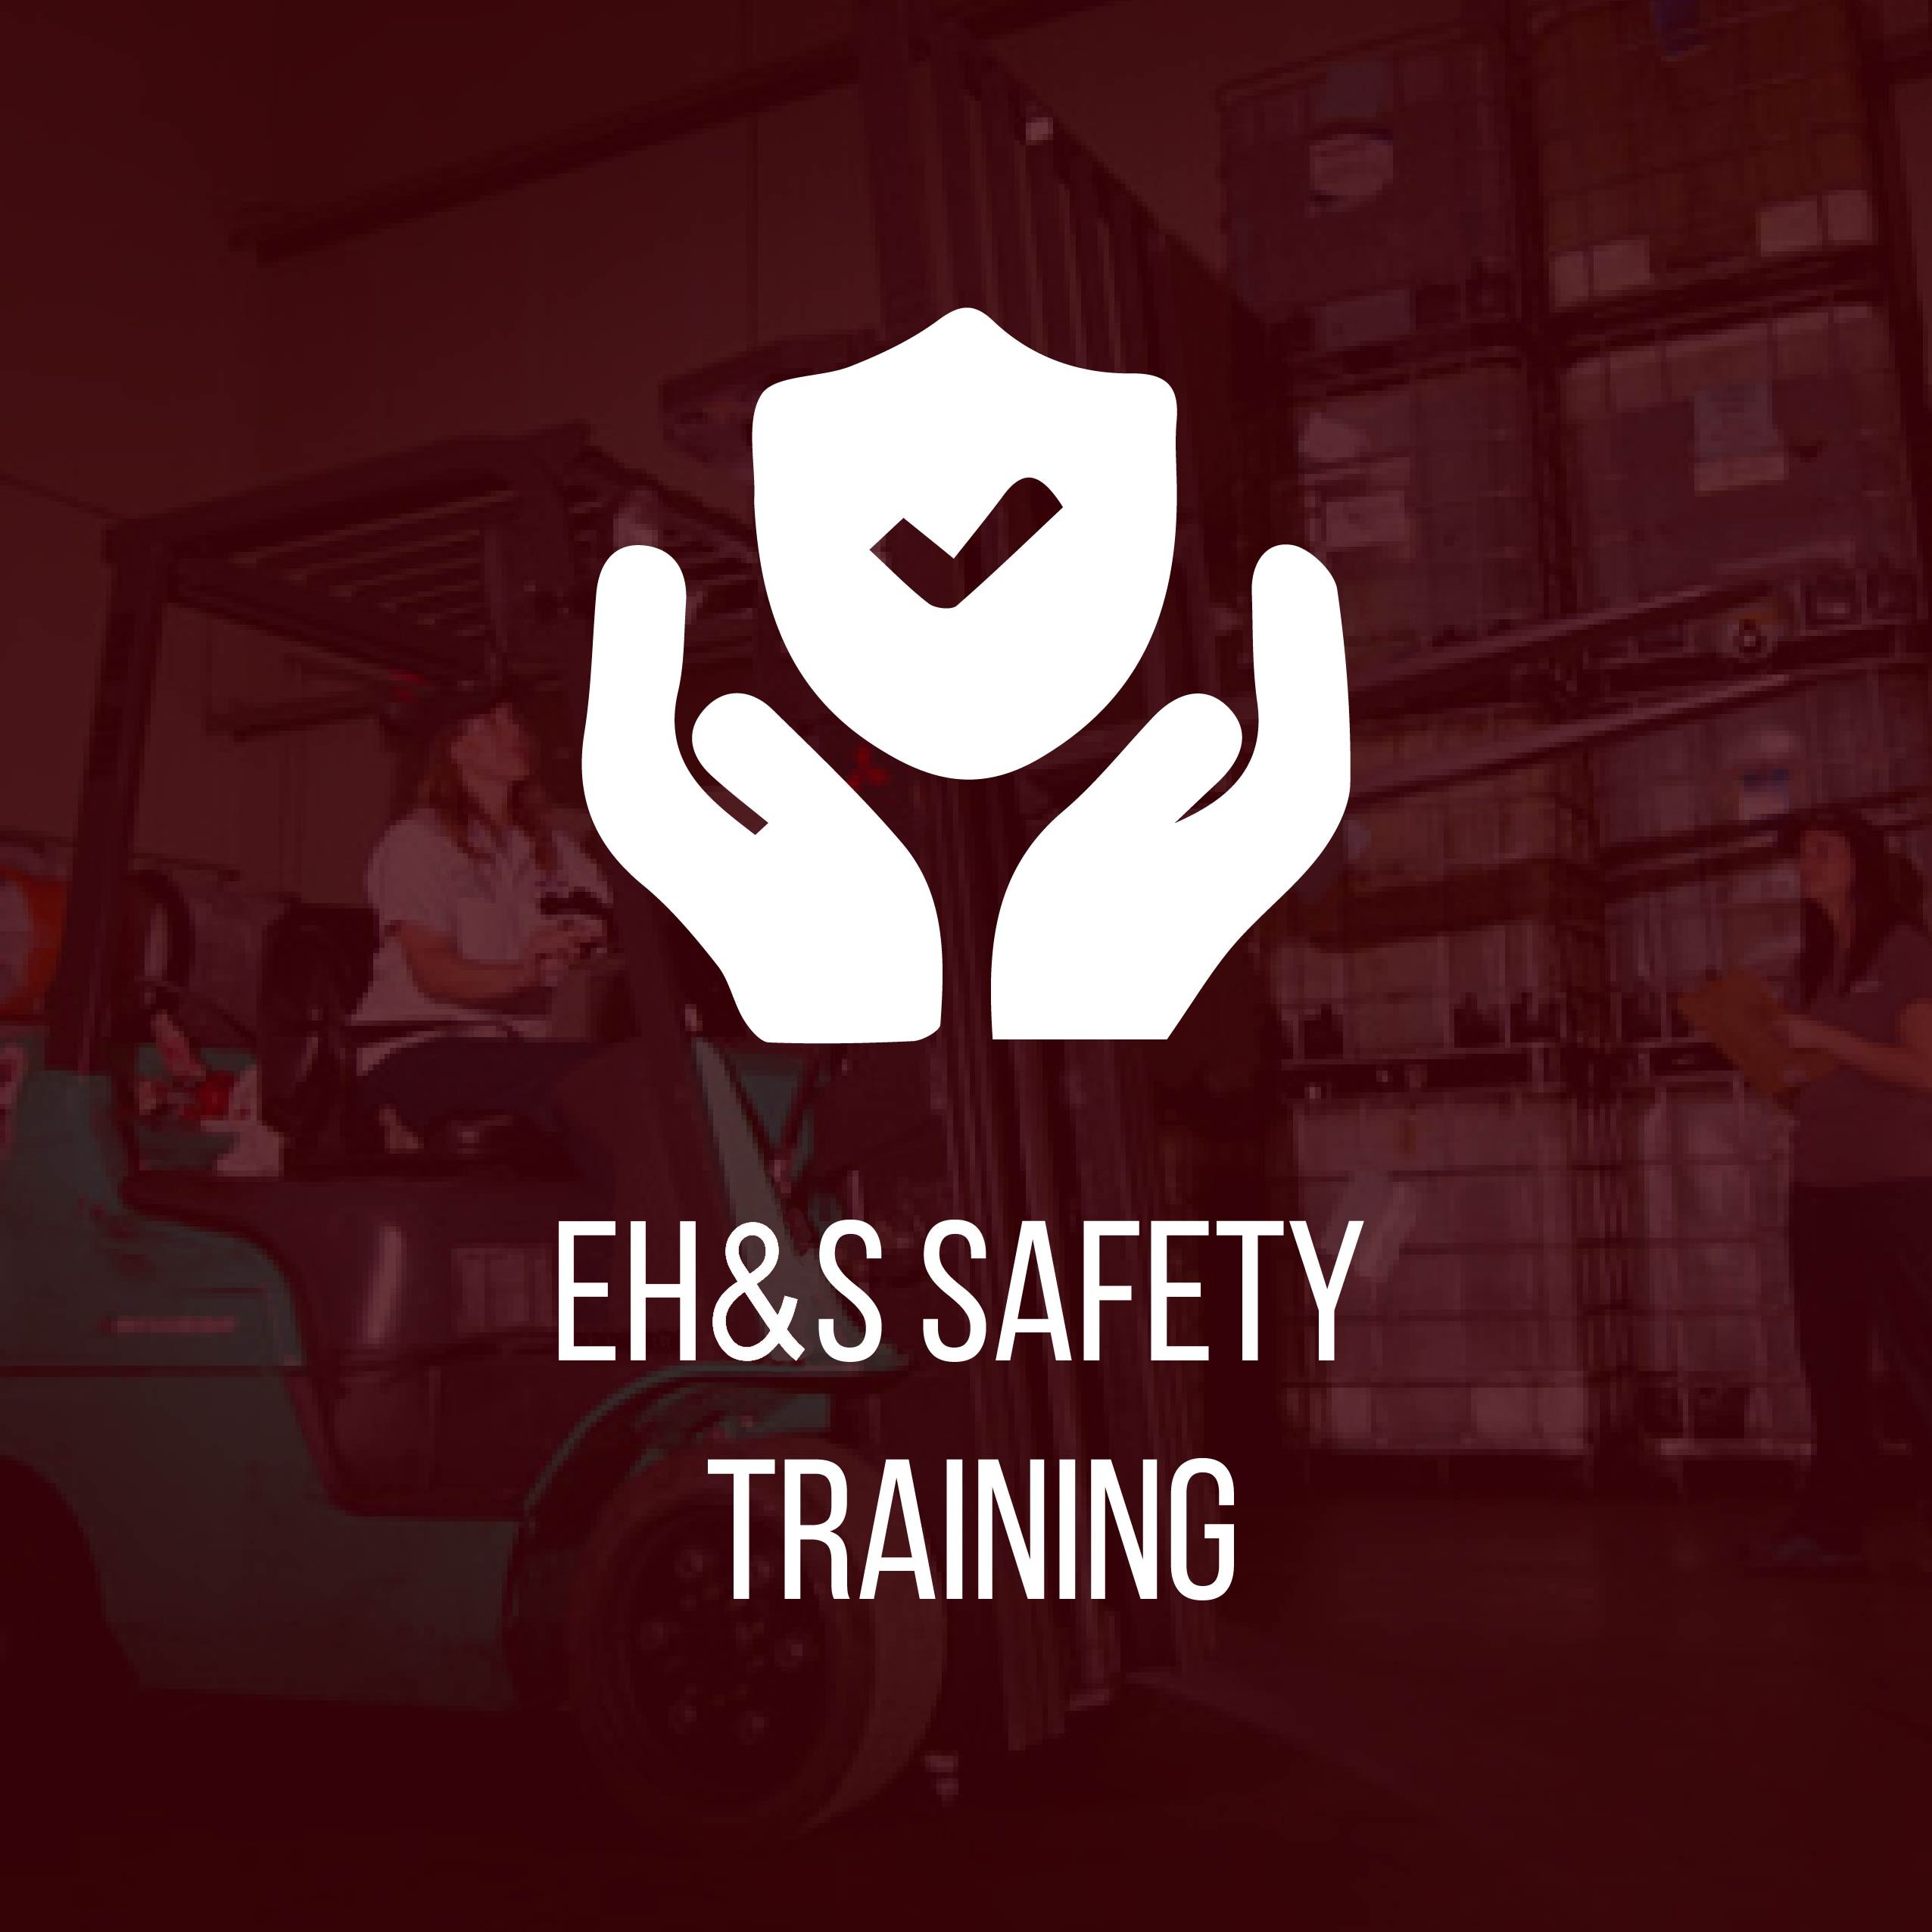 EHS Safety Training